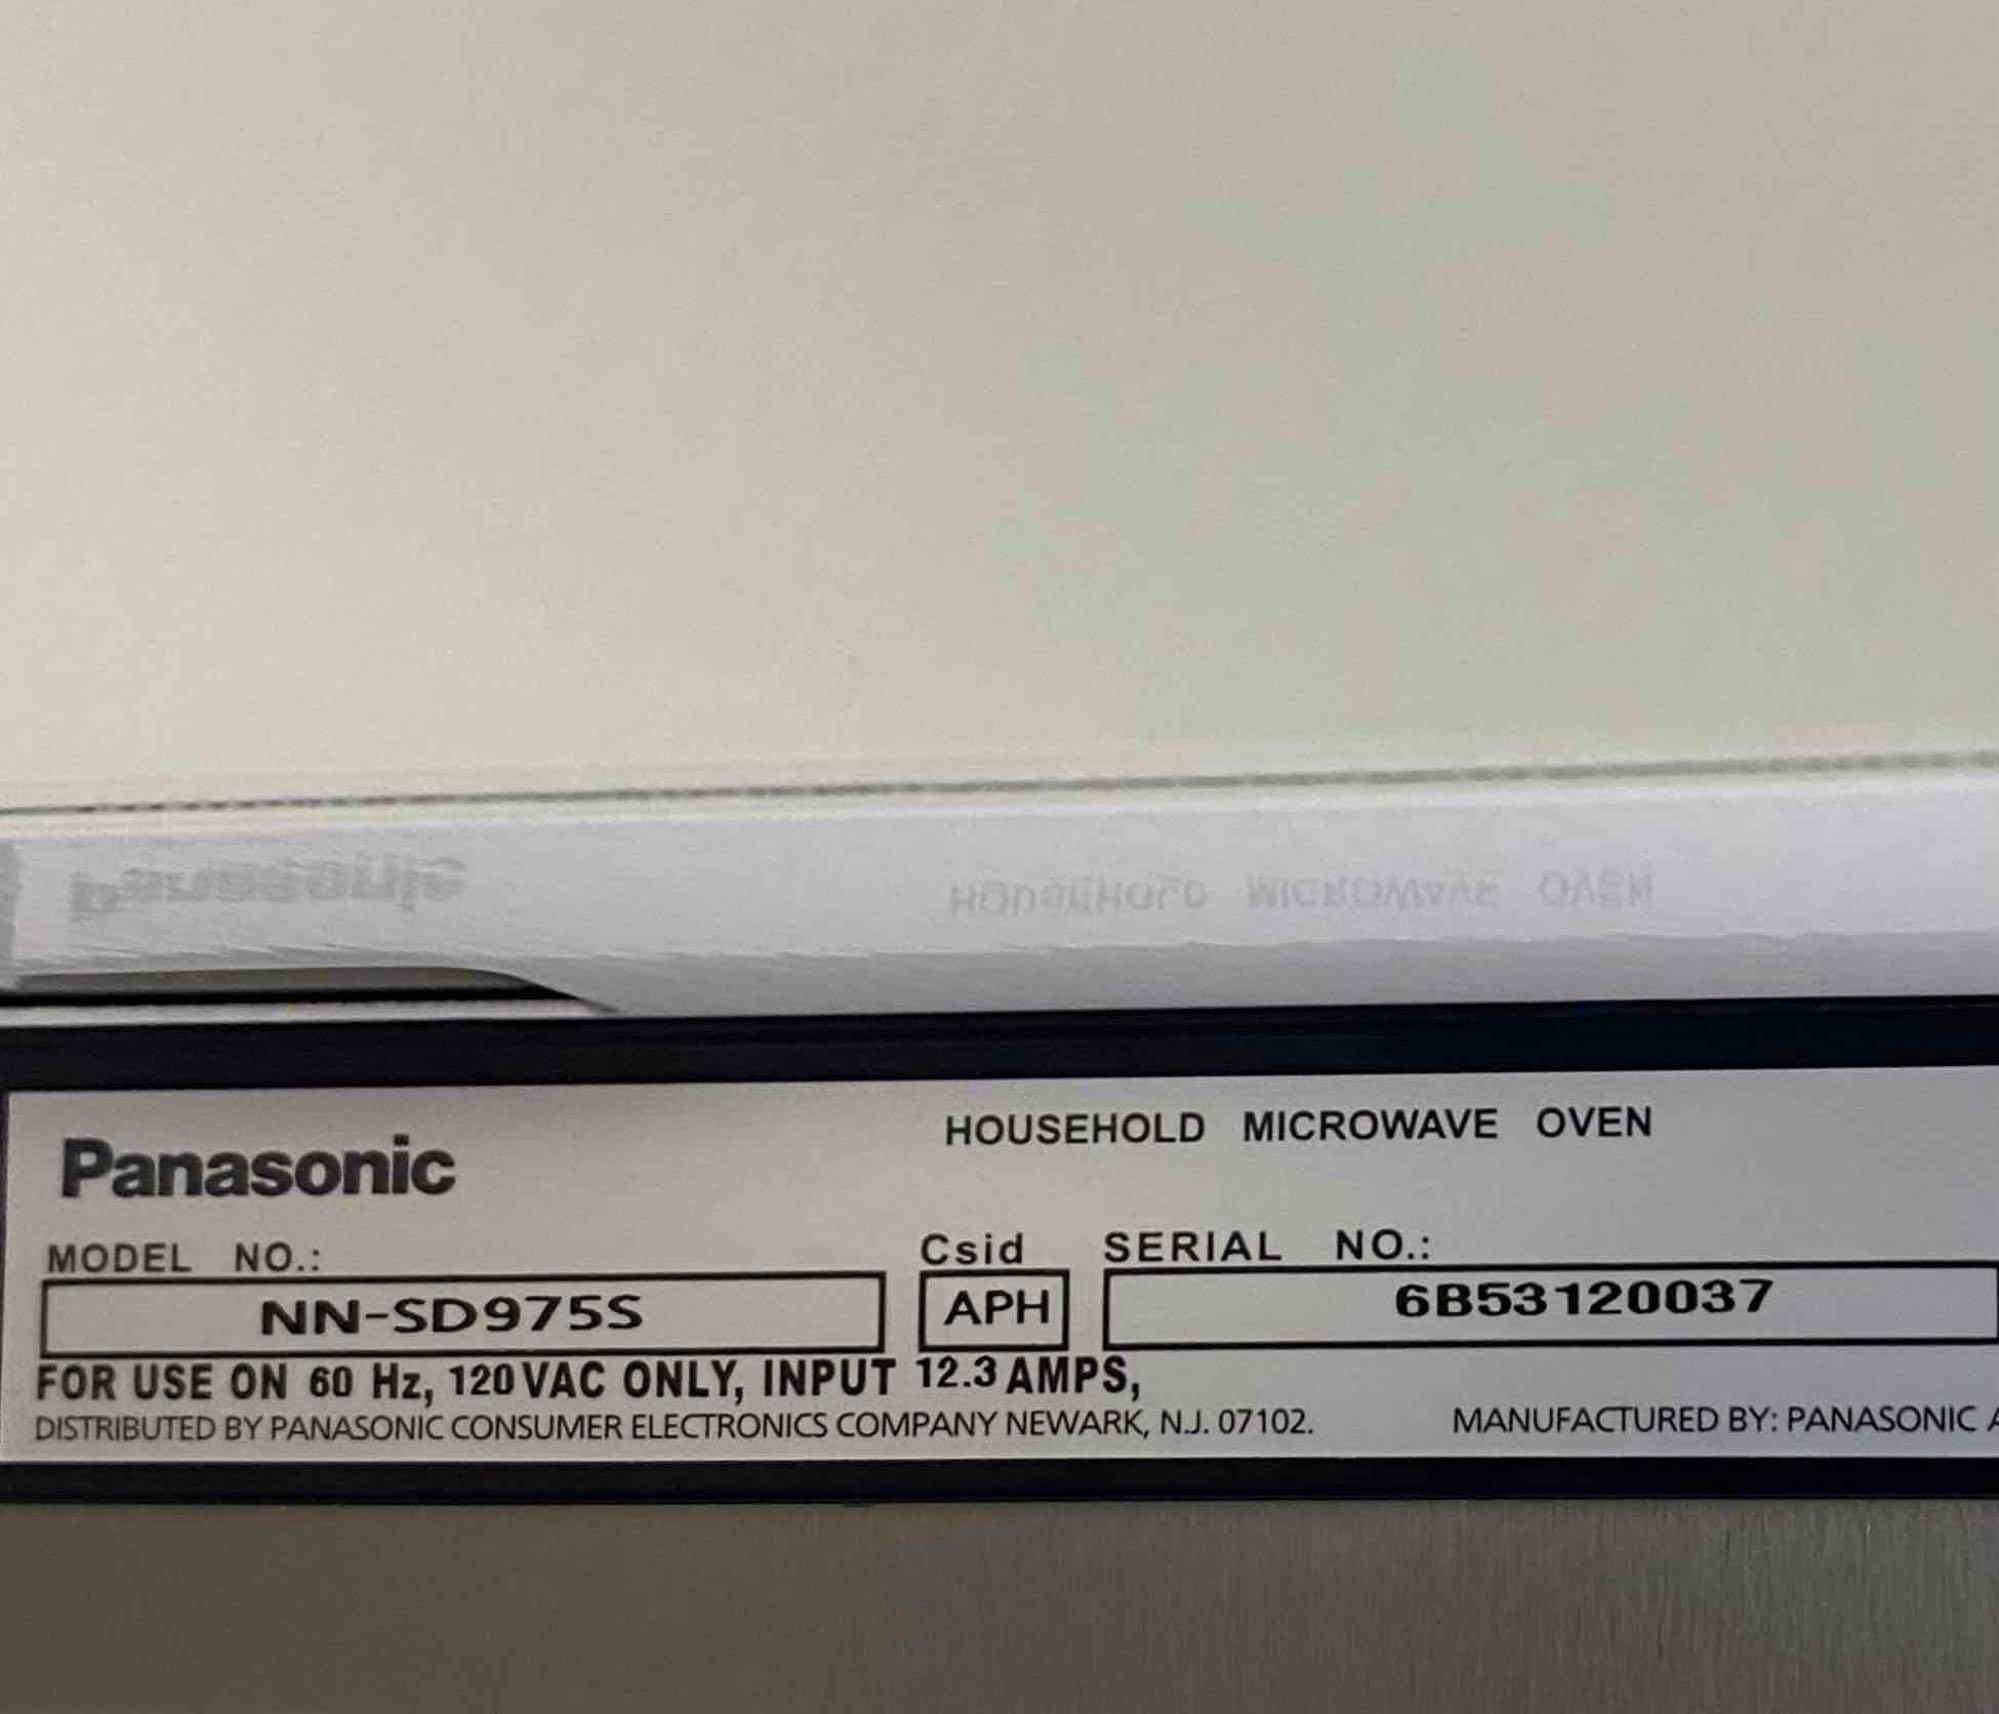 Panasonic 2.2 Cu. Ft. Built-In Countertop Cyclonic Wave Microwave Oven